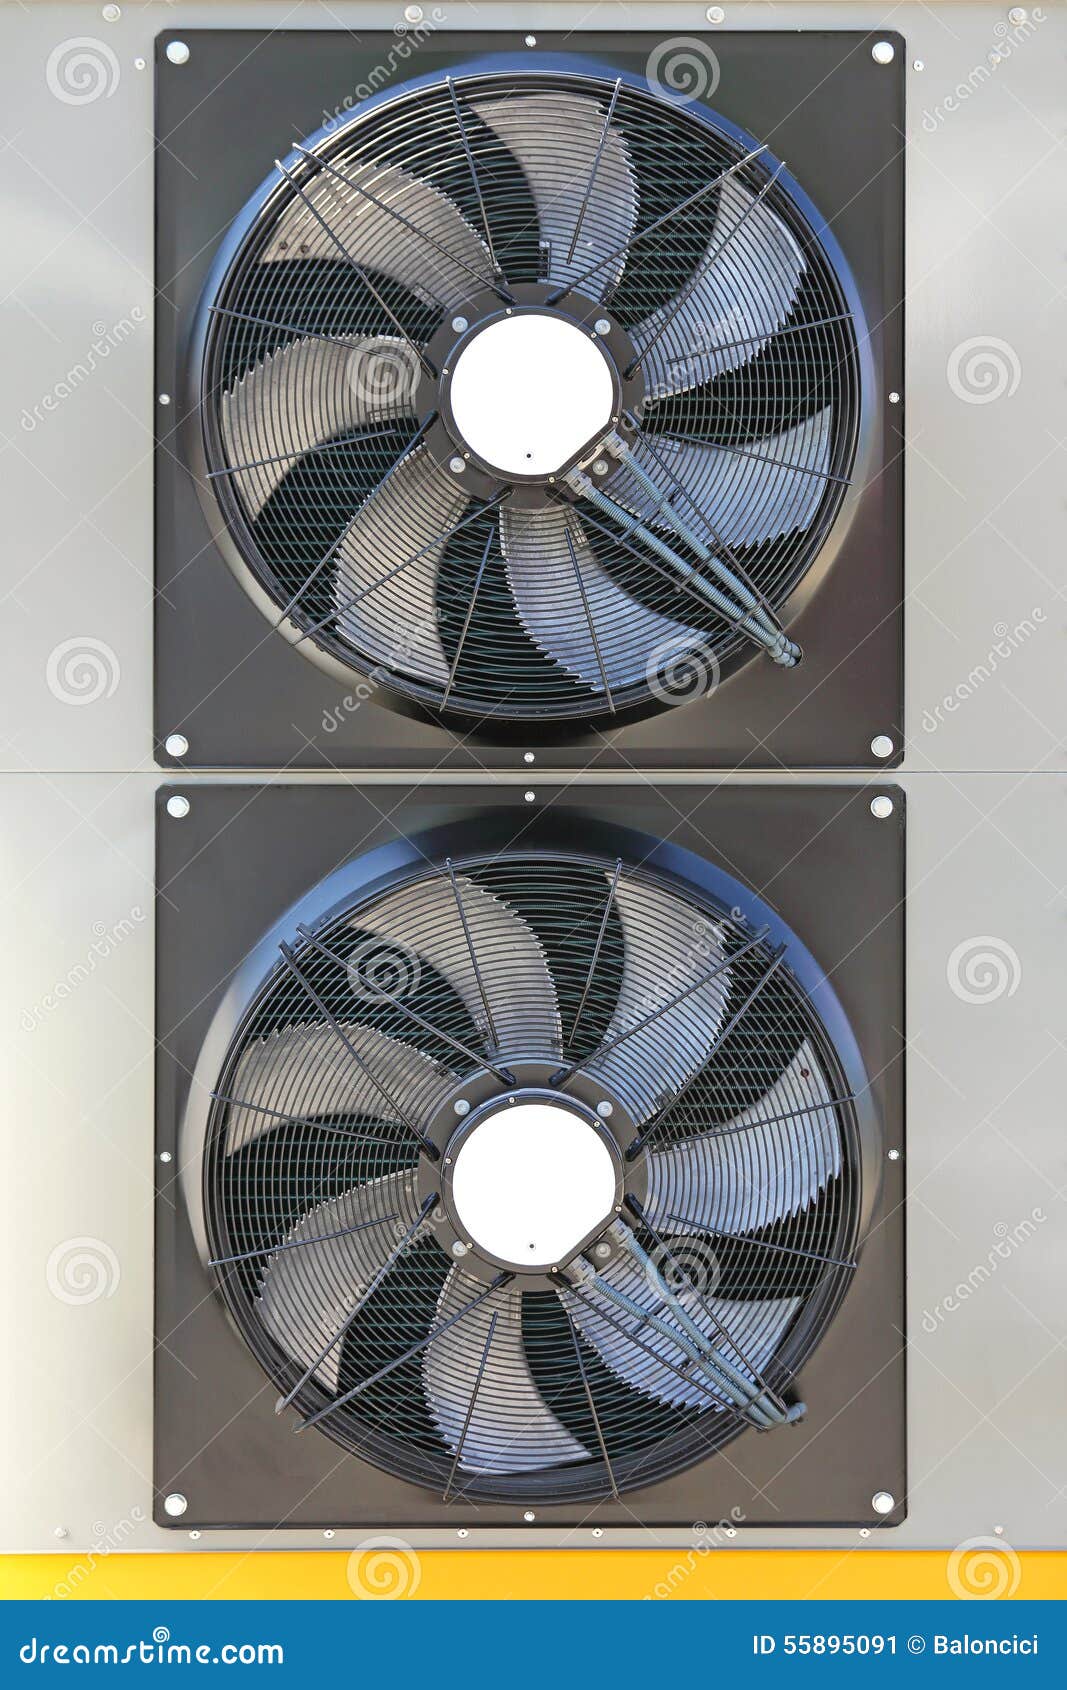 Ventilatori industriali immagine stock. Immagine di industriale - 55895091